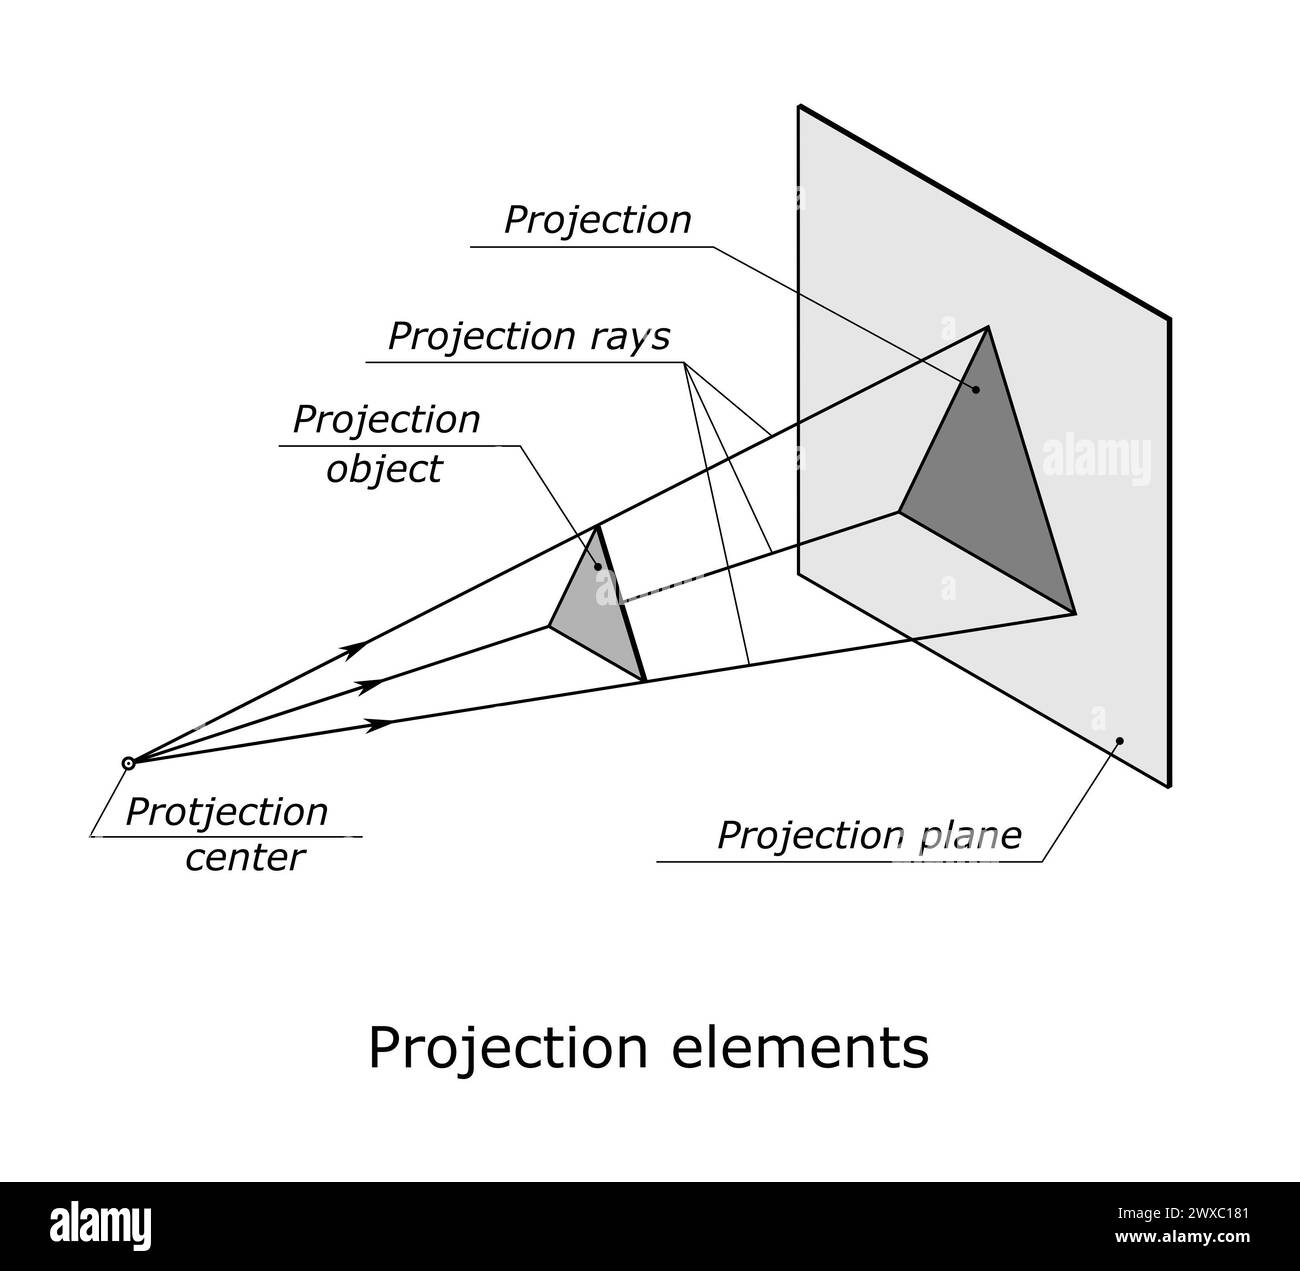 Projection elements illustration isolated on white Stock Photo